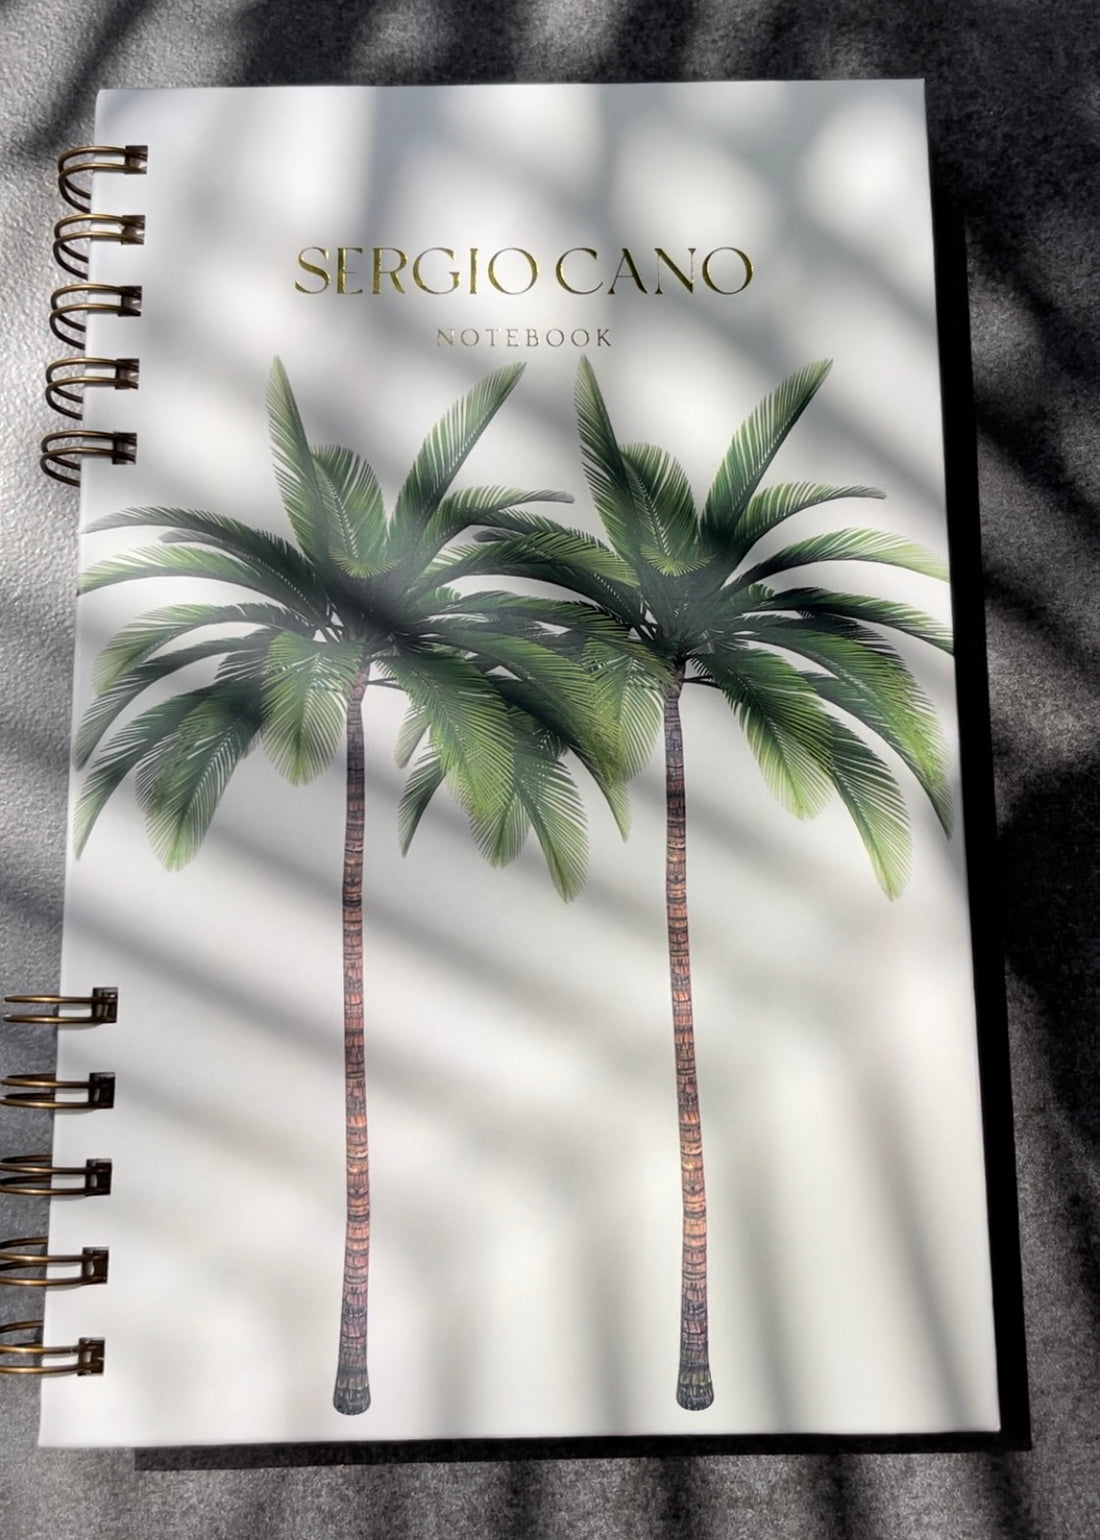 Cuaderno Sergio Cano